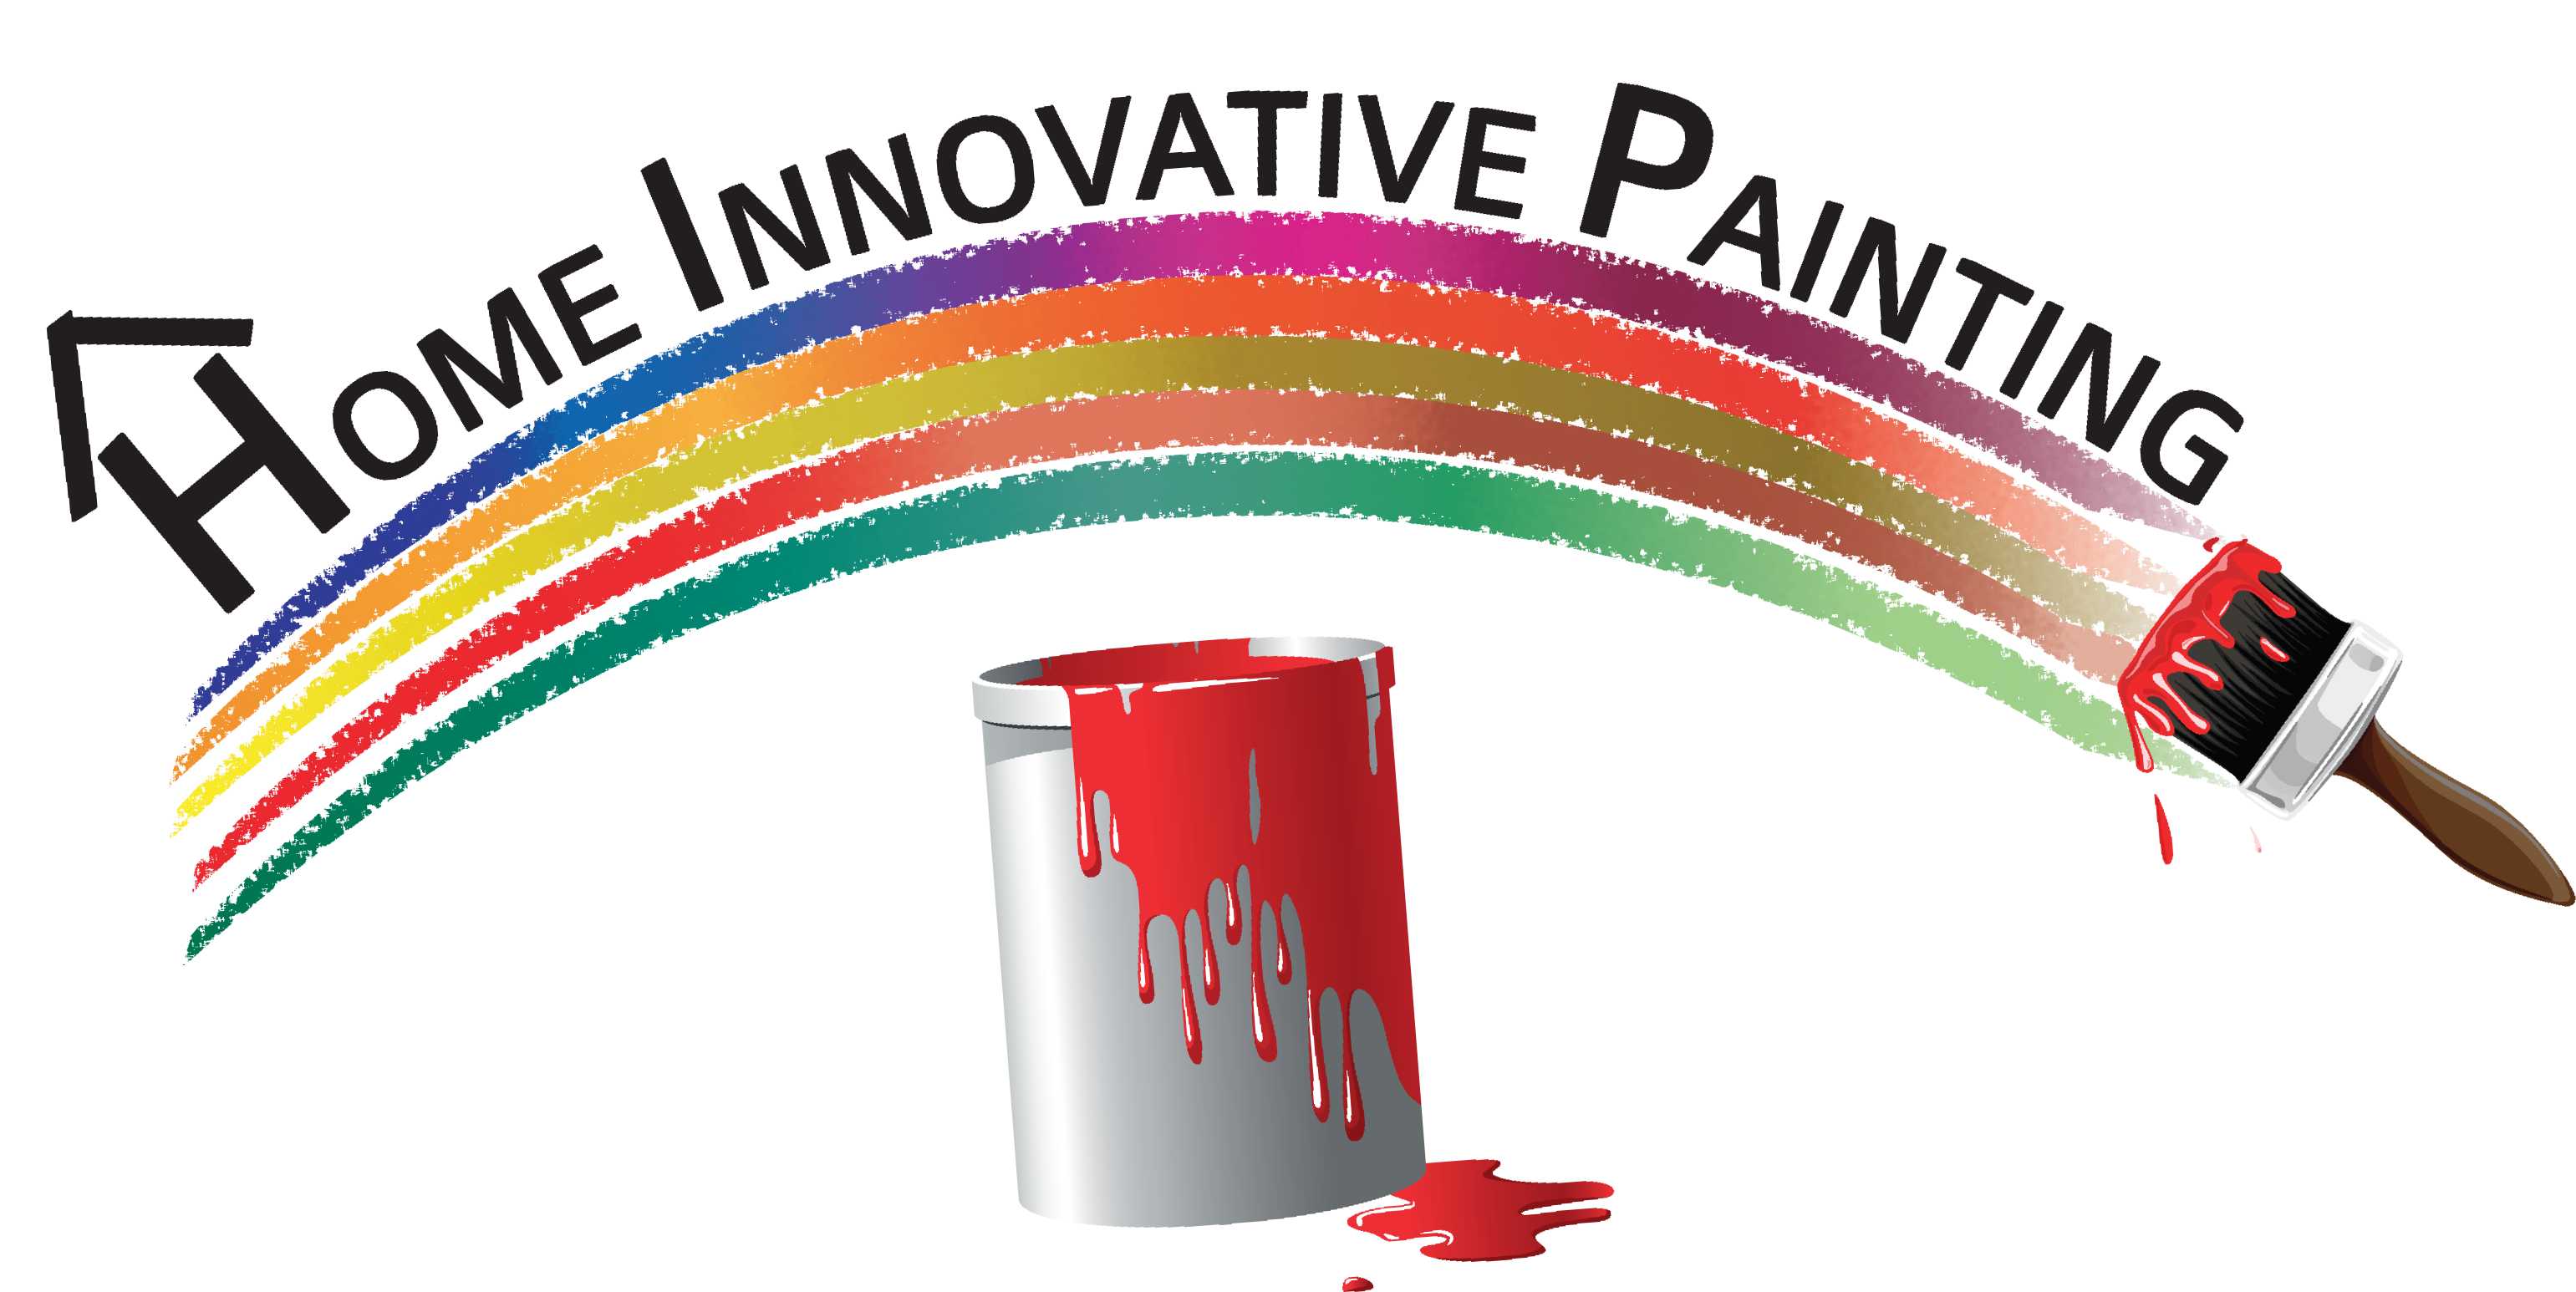 Home Innovative Painting Logo